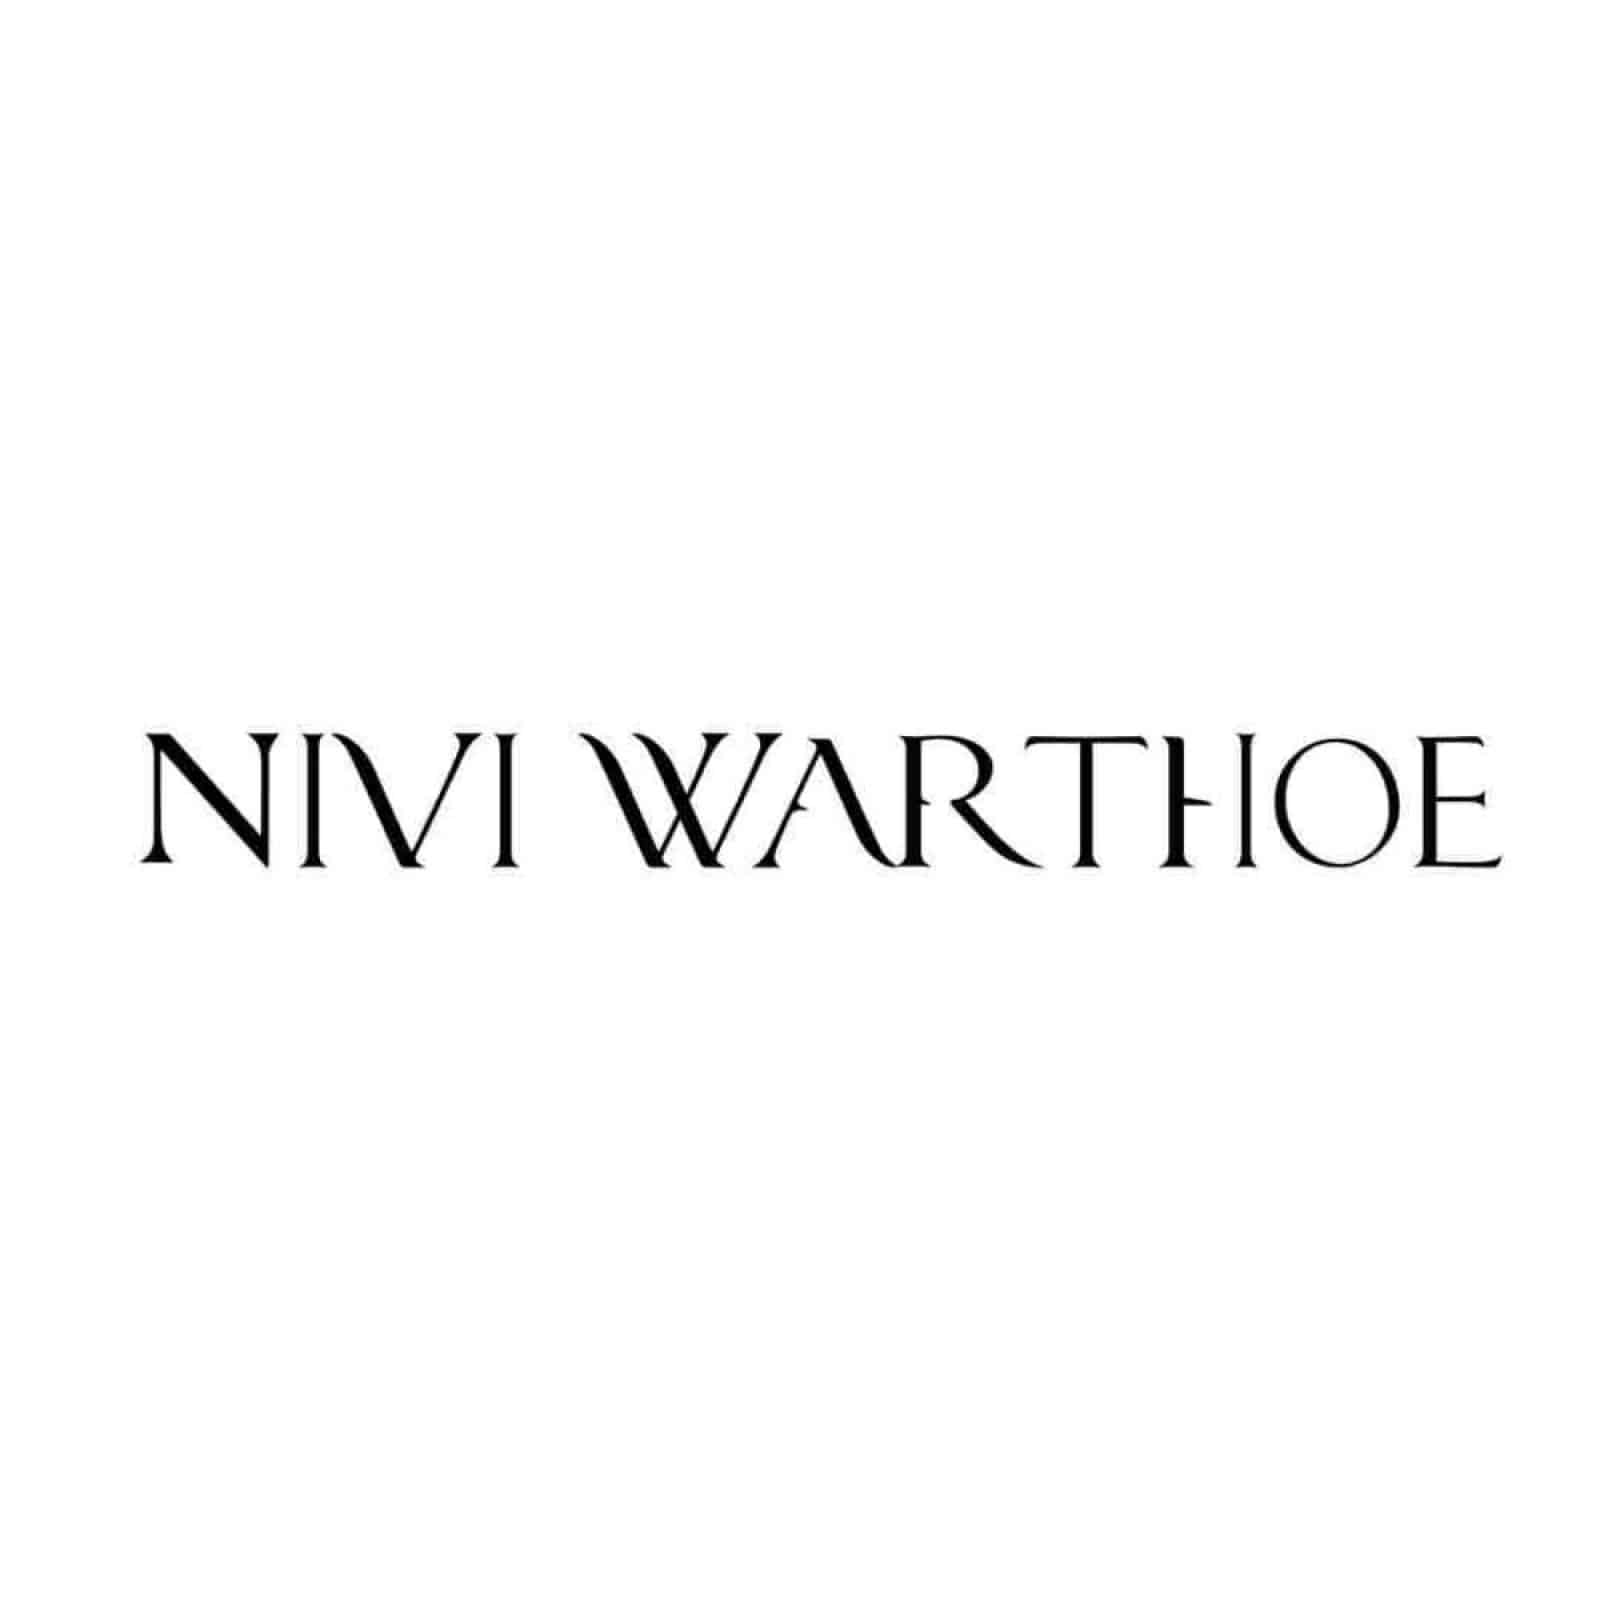 Nivi Warthoe